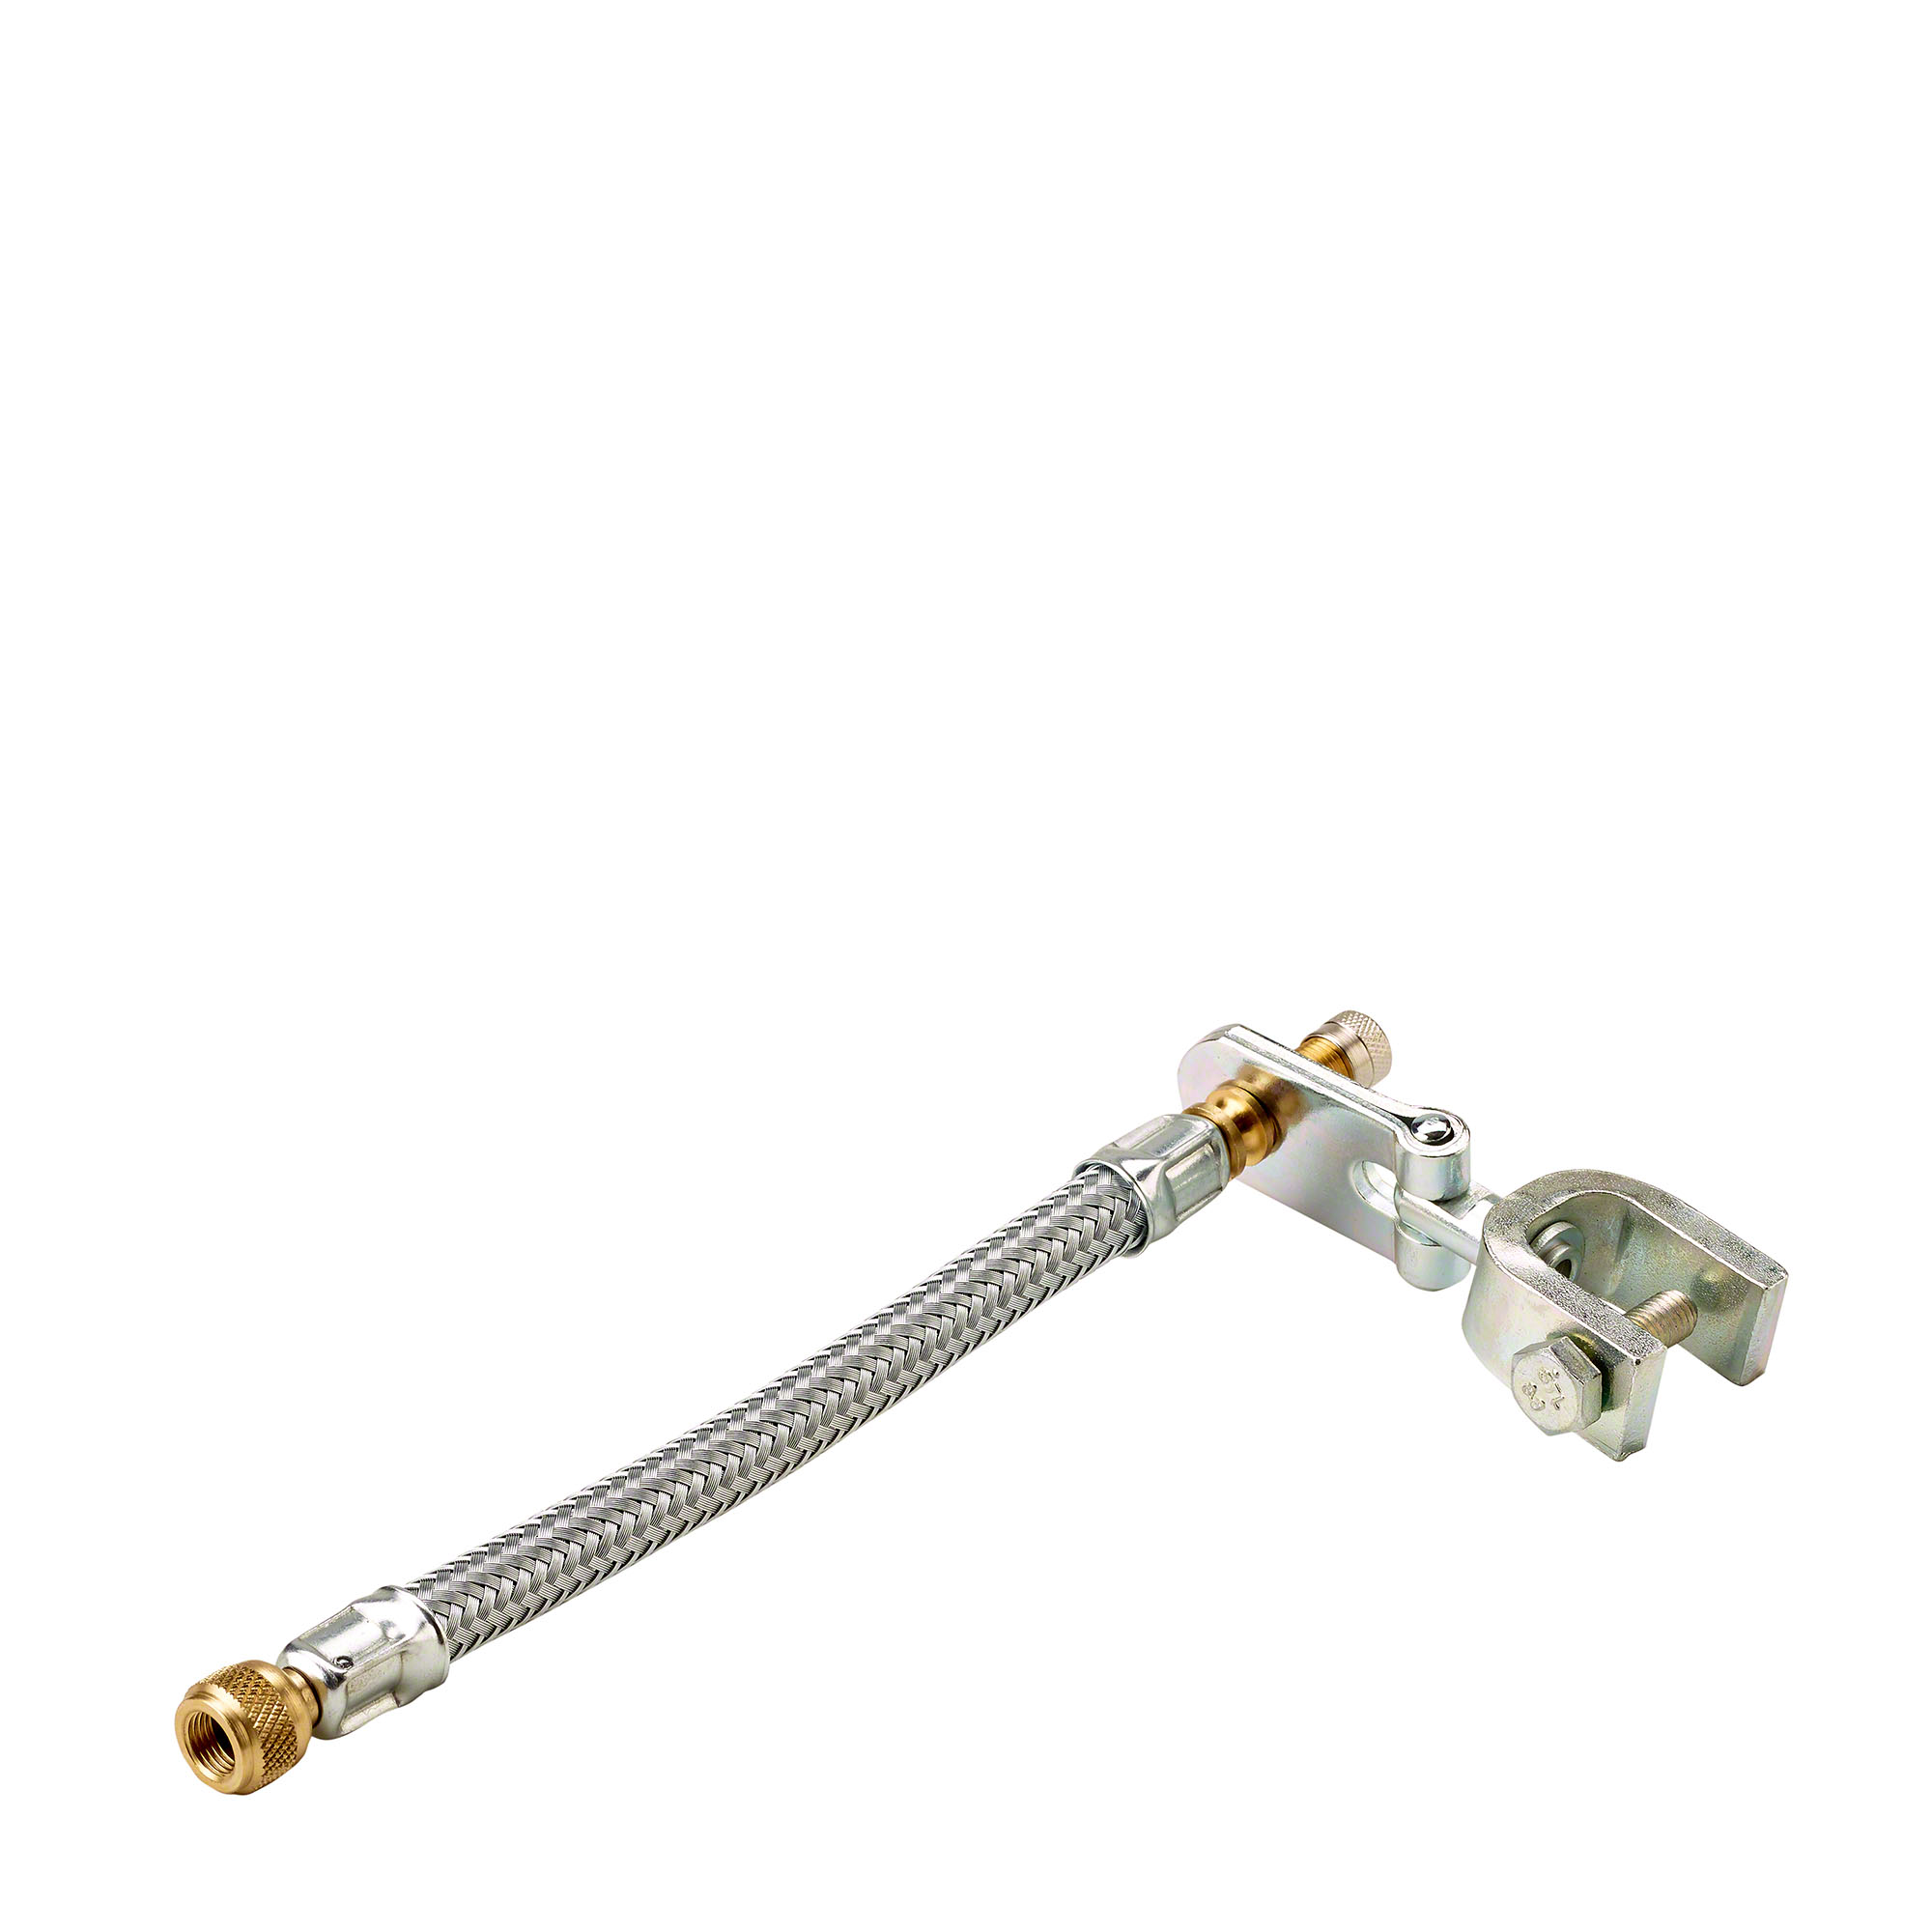 Valve extension - 169 mm, swivel clamp